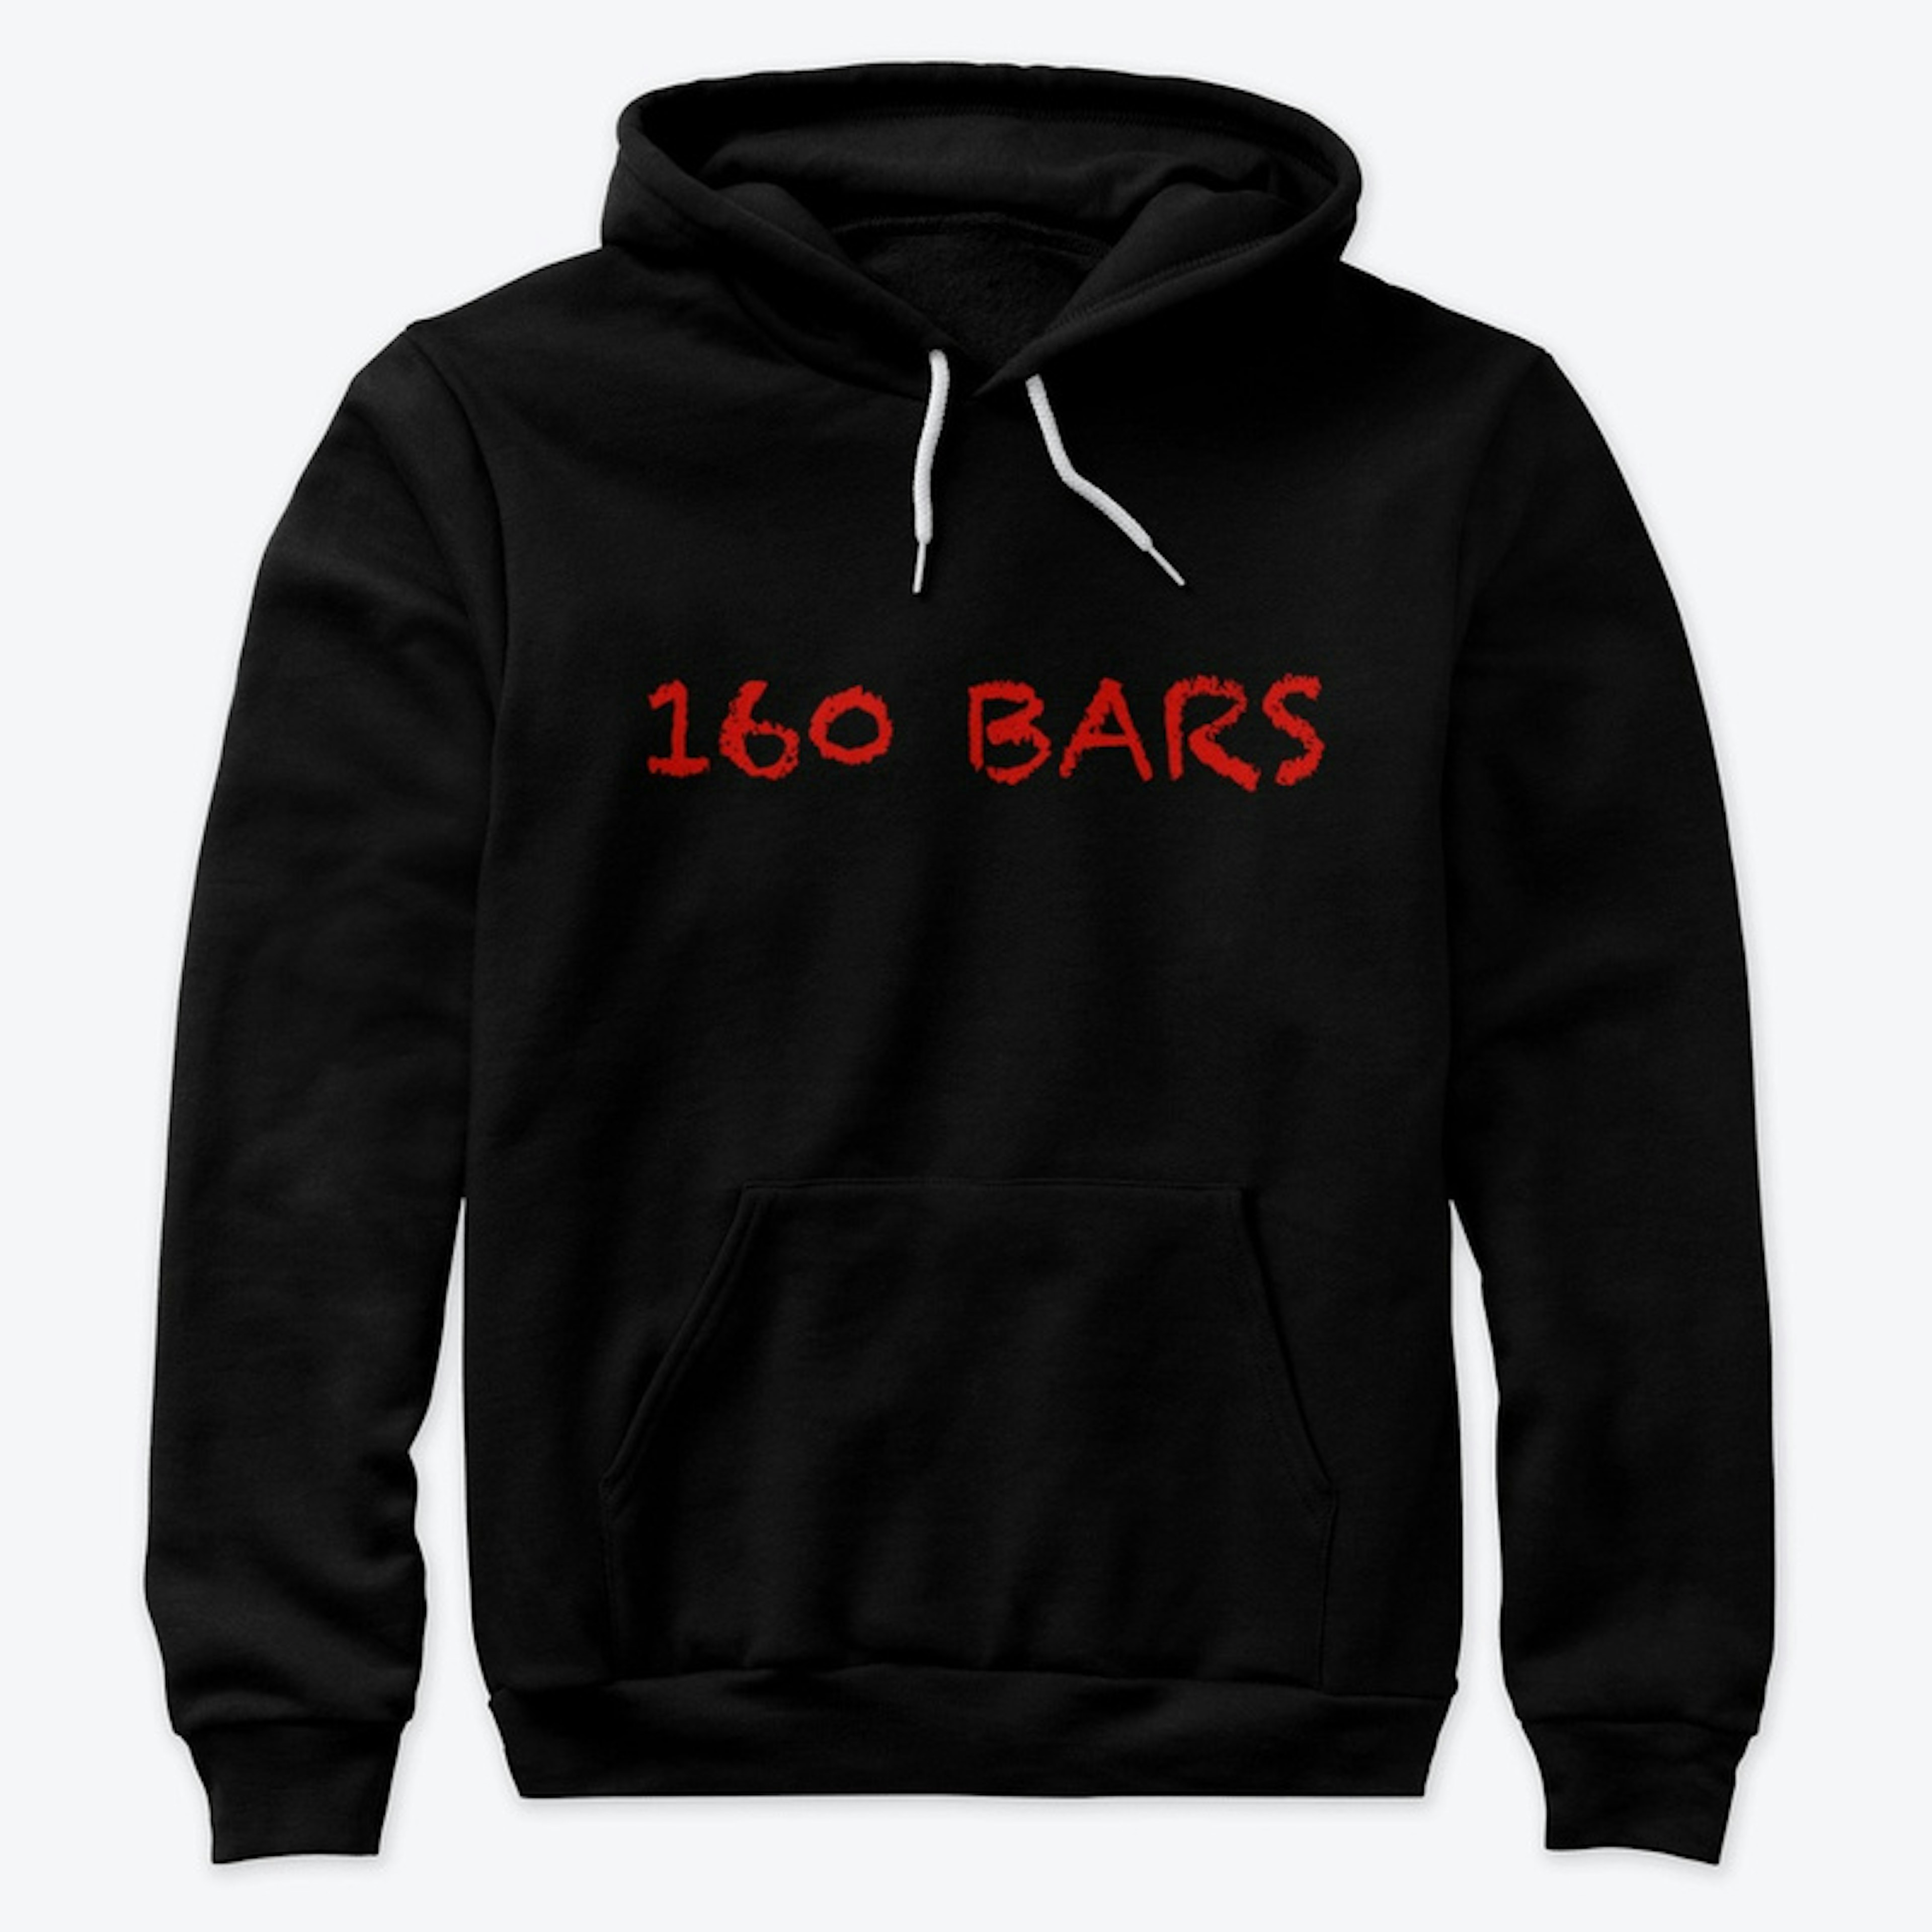 160 bars